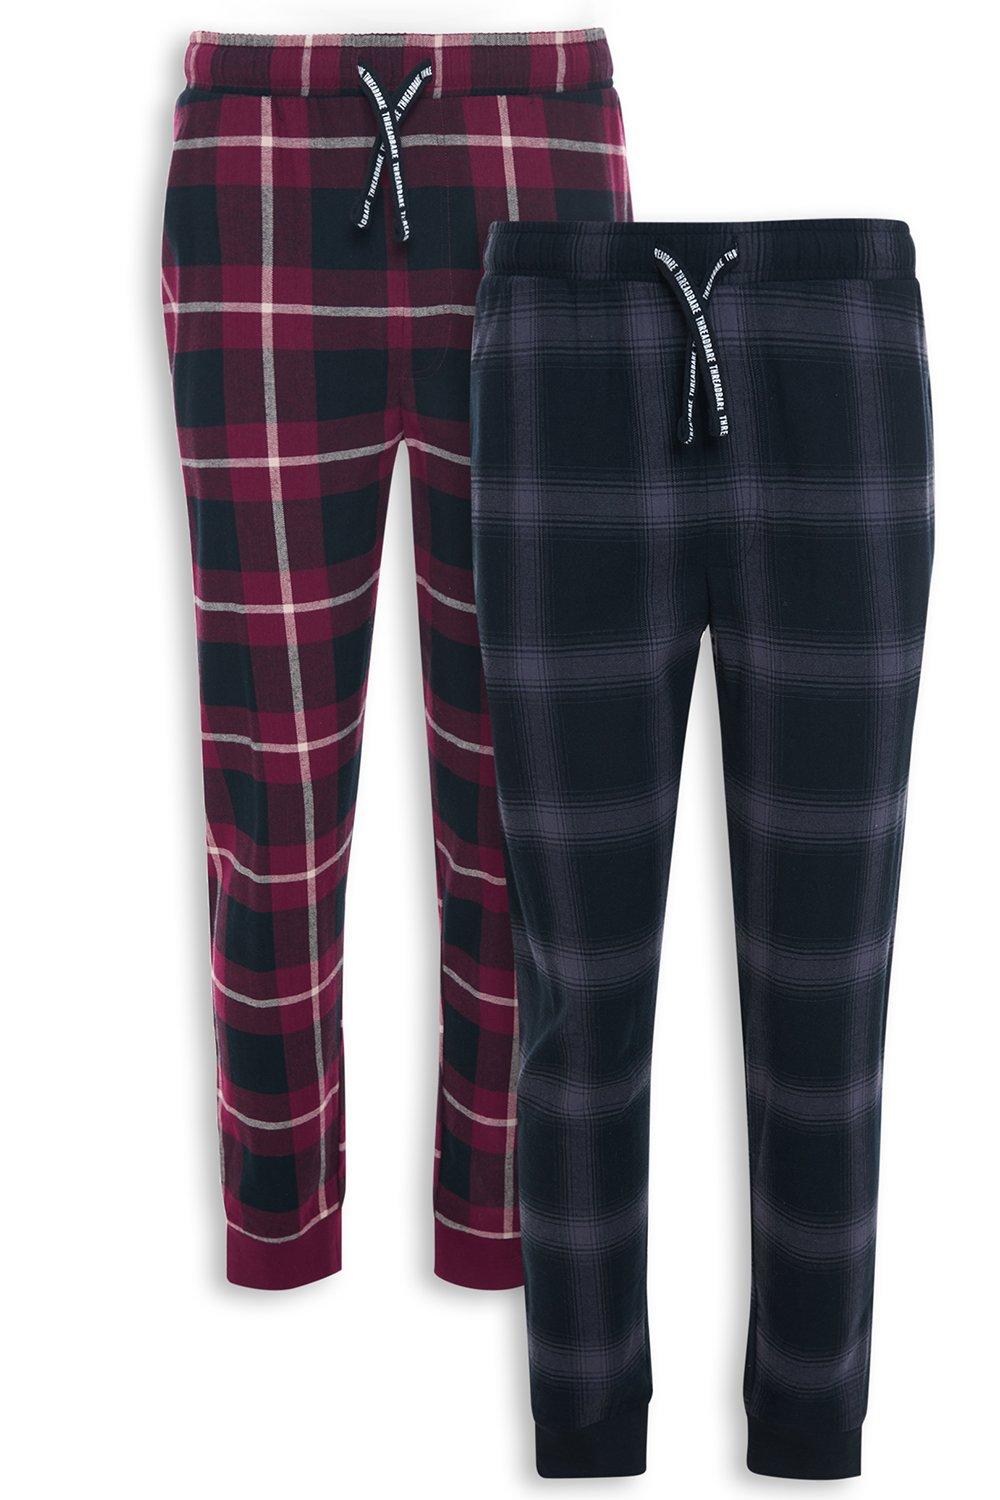 2 Pack Cotton 'Bud' Check Pyjama Trousers